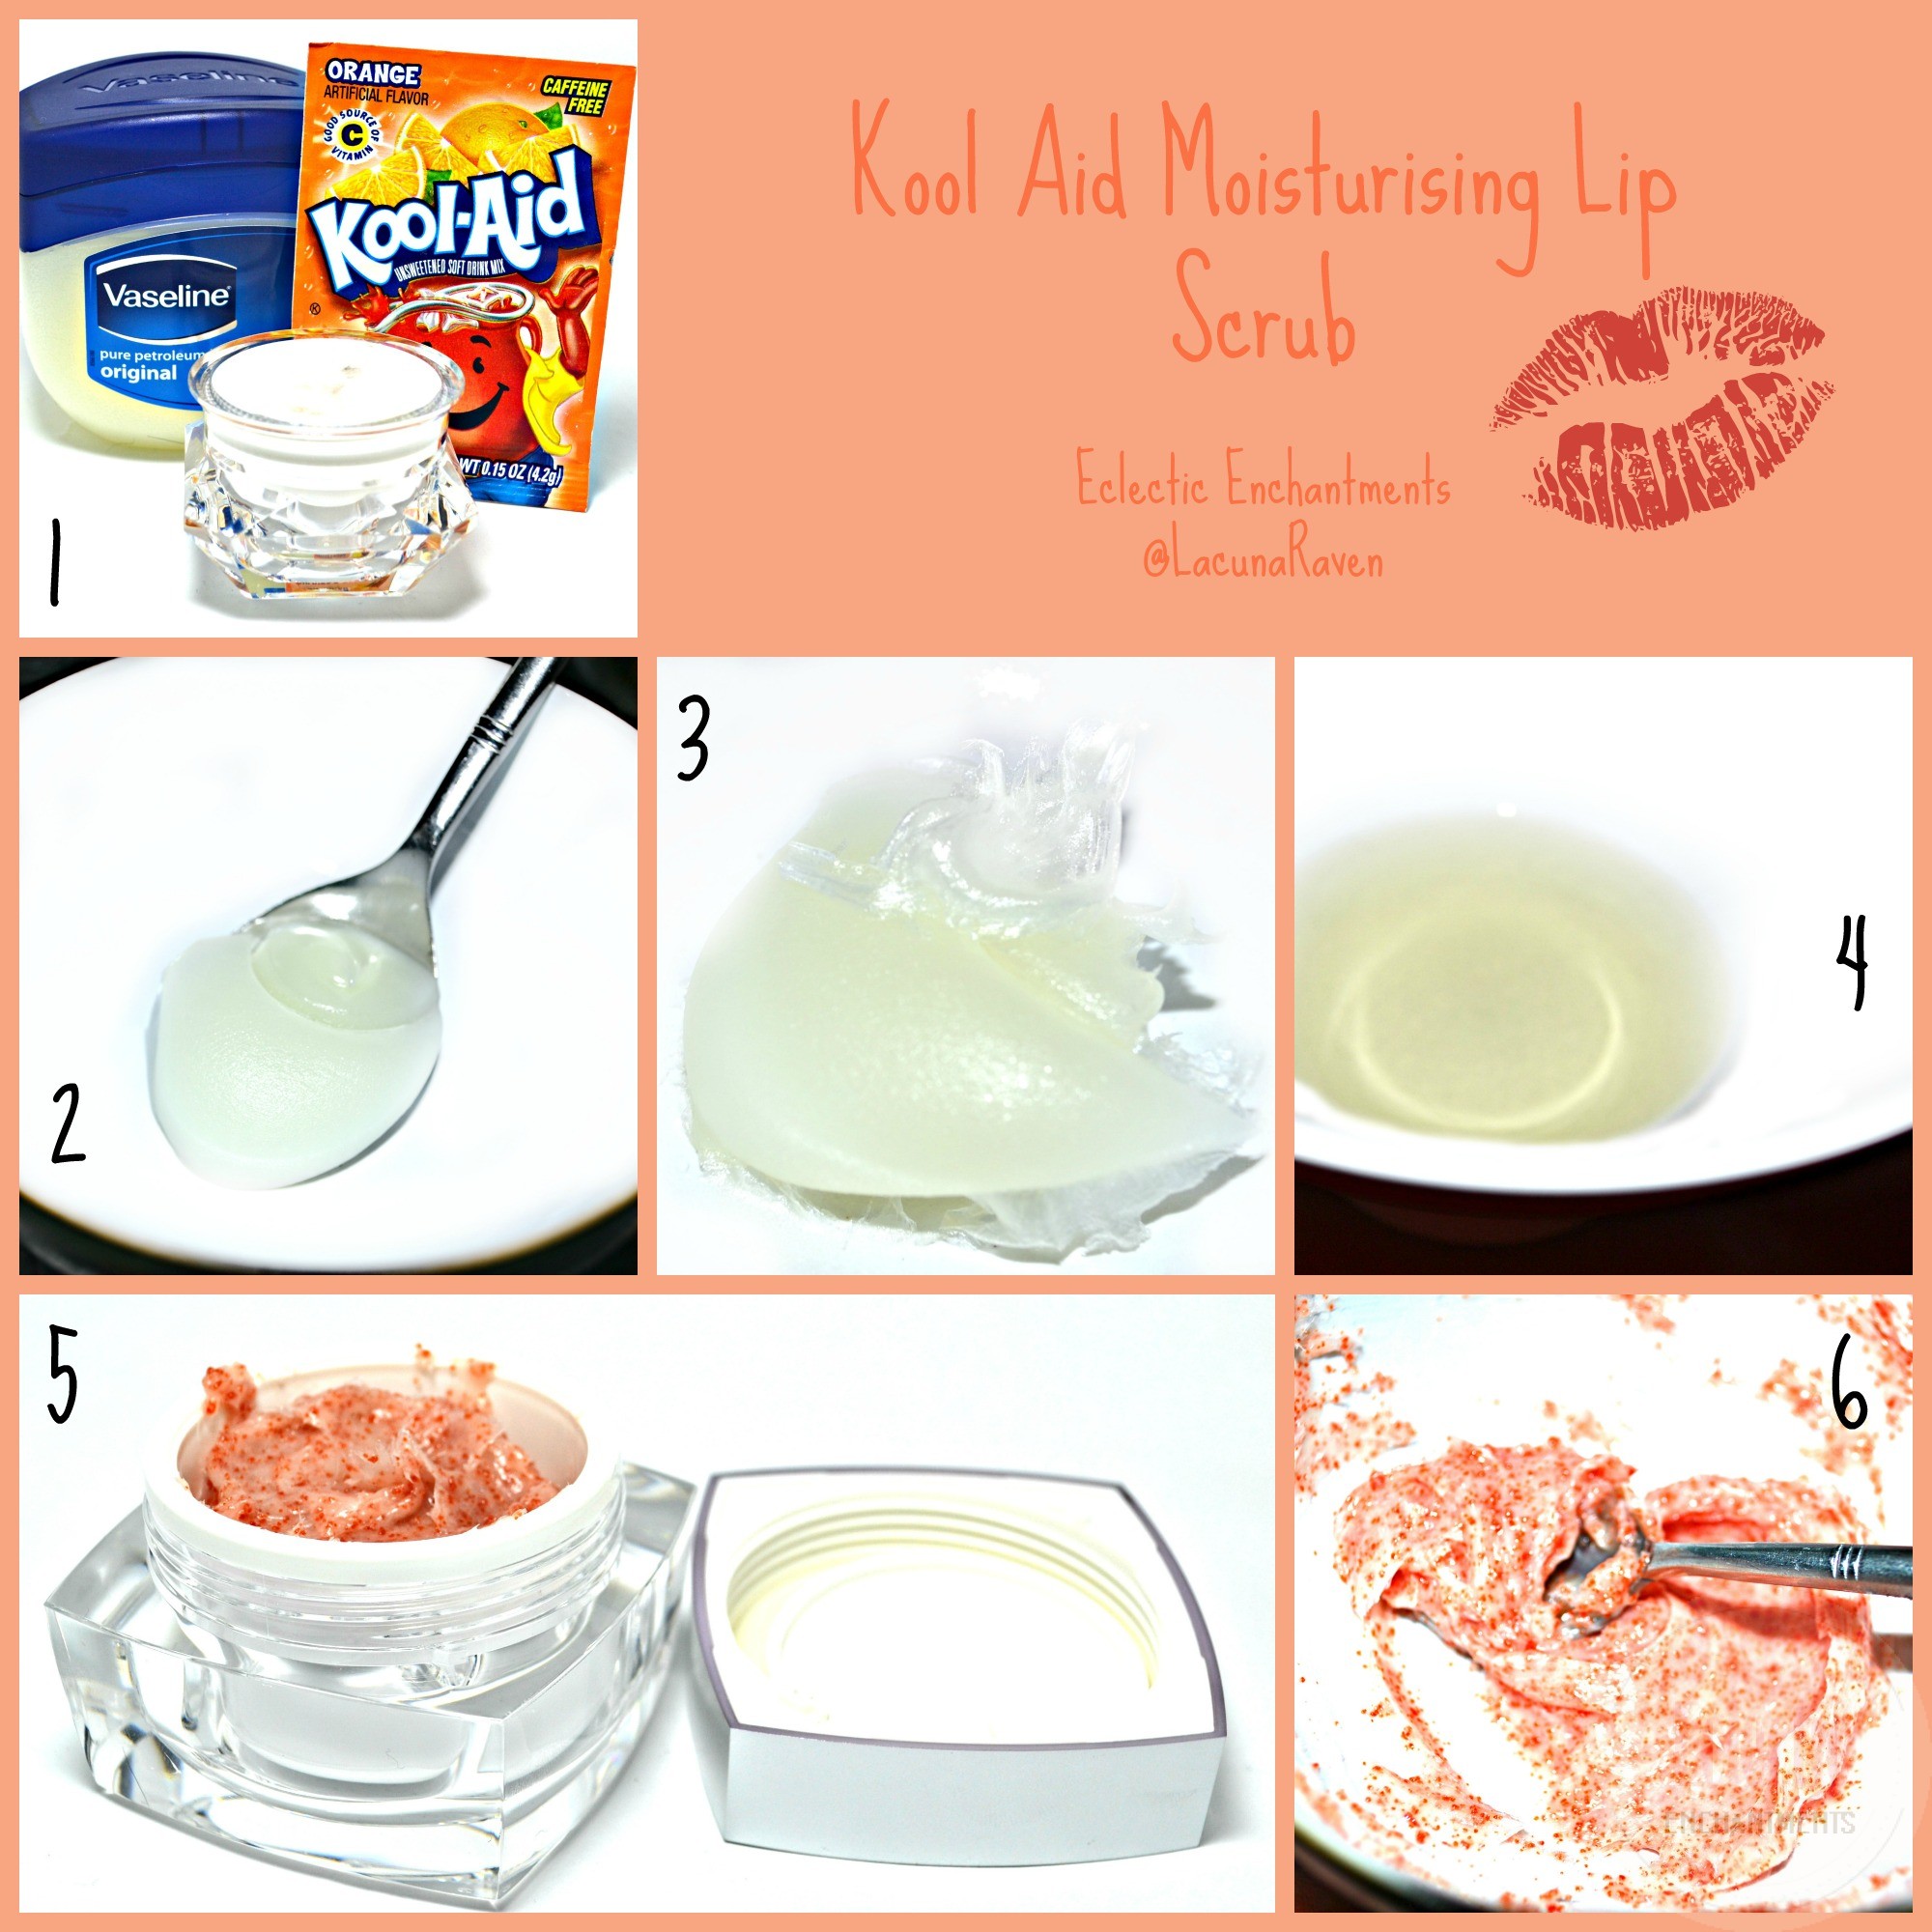 Kool aid moisturising lip scrub 7